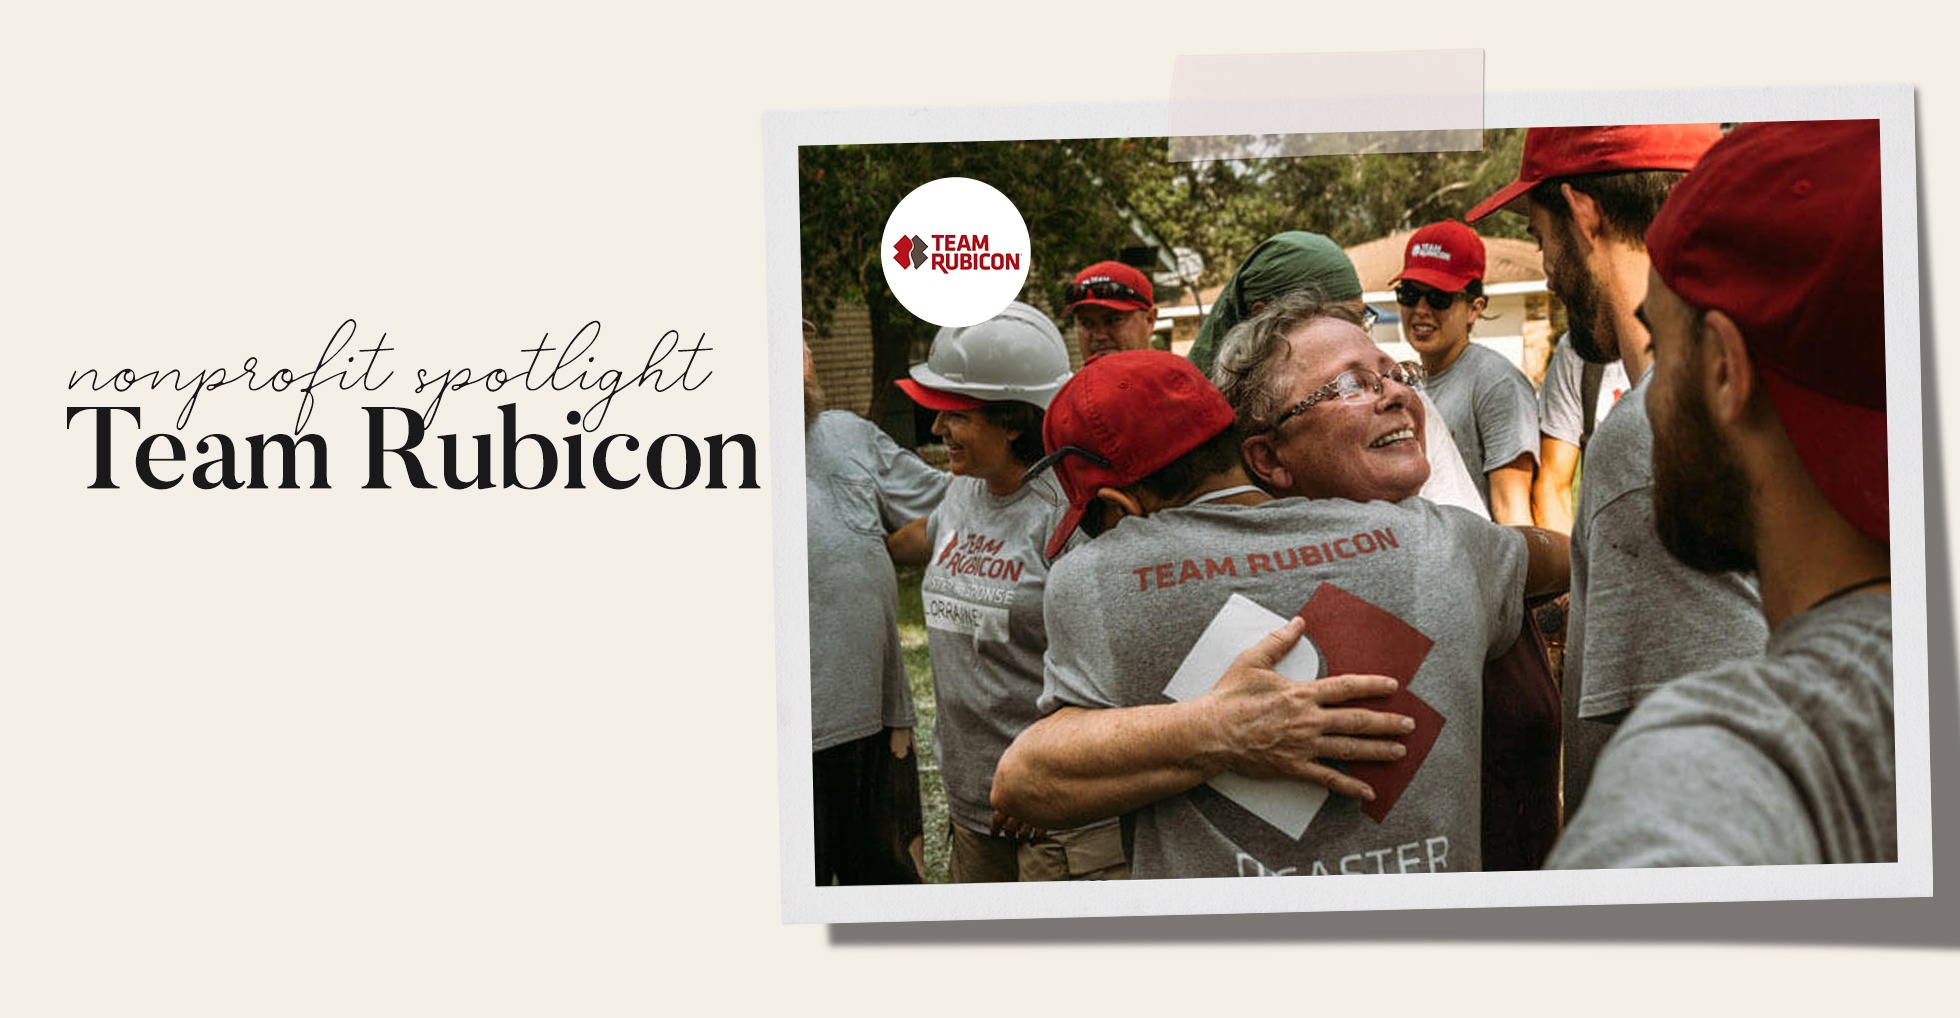 Team Rubicon Global Nonprofit Spotlight